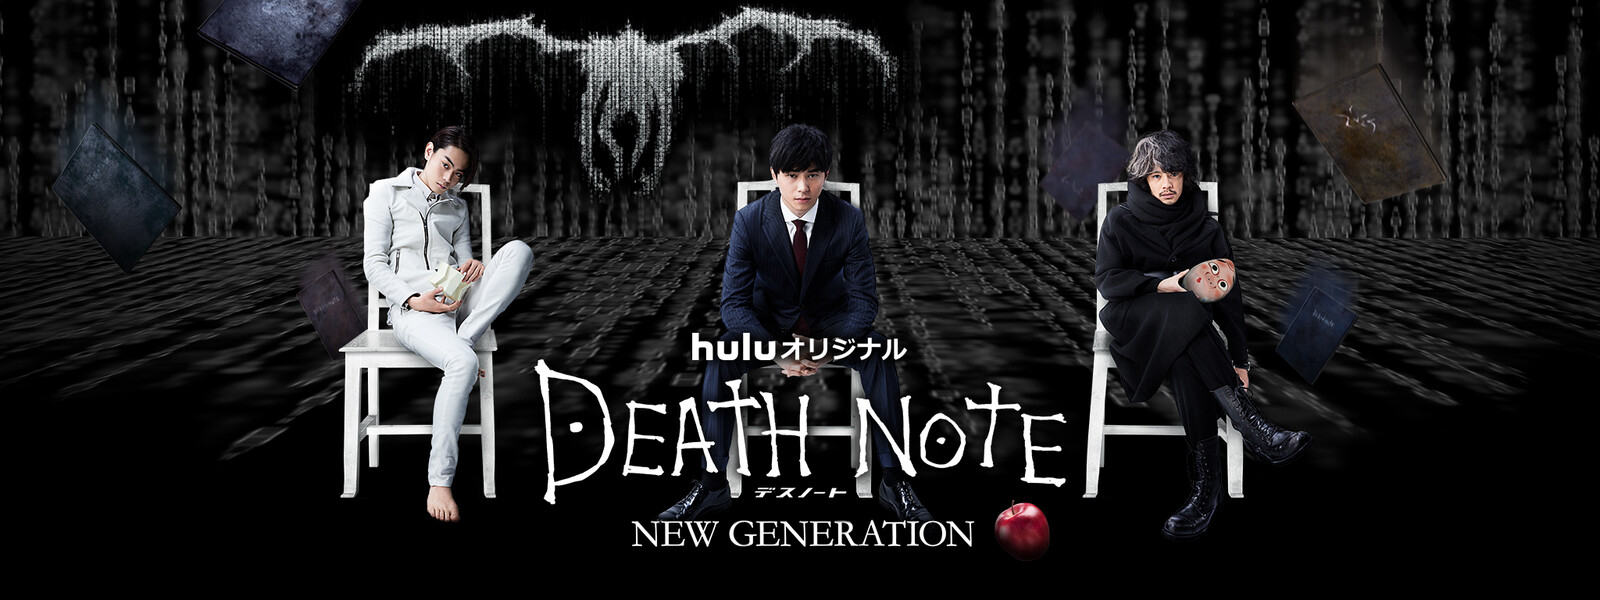 DEATH NOTE デスノート NEW GENERATIONの動画 - メイキング DEATH NOTE デスノート 証言〜Beginning of the Movie〜